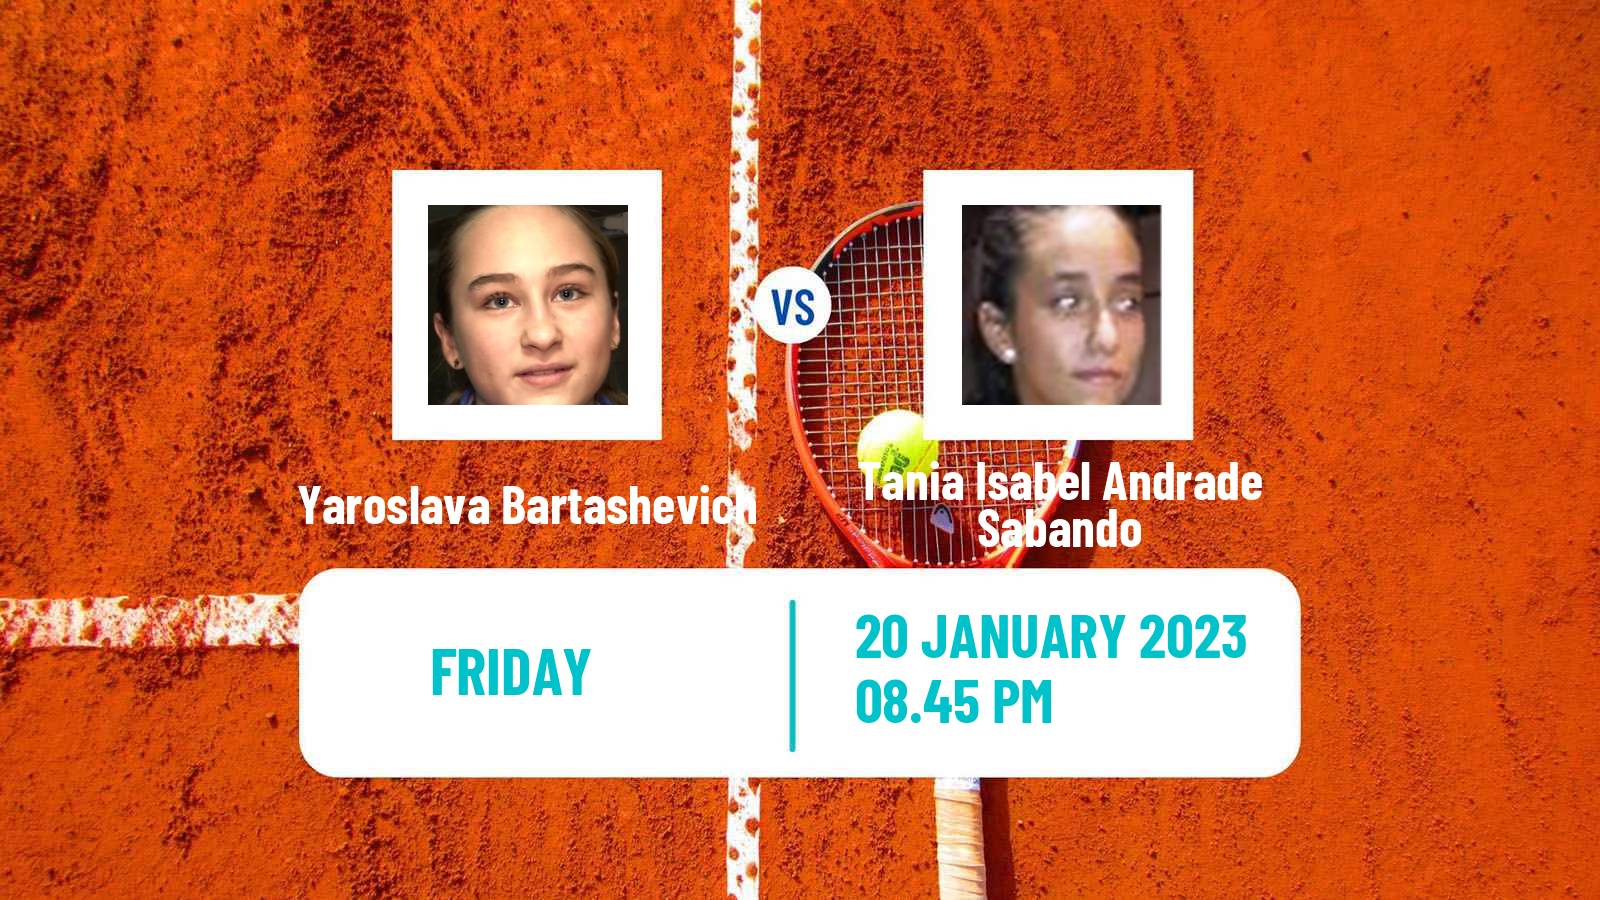 Tennis Girls Singles Australian Open Yaroslava Bartashevich - Tania Isabel Andrade Sabando